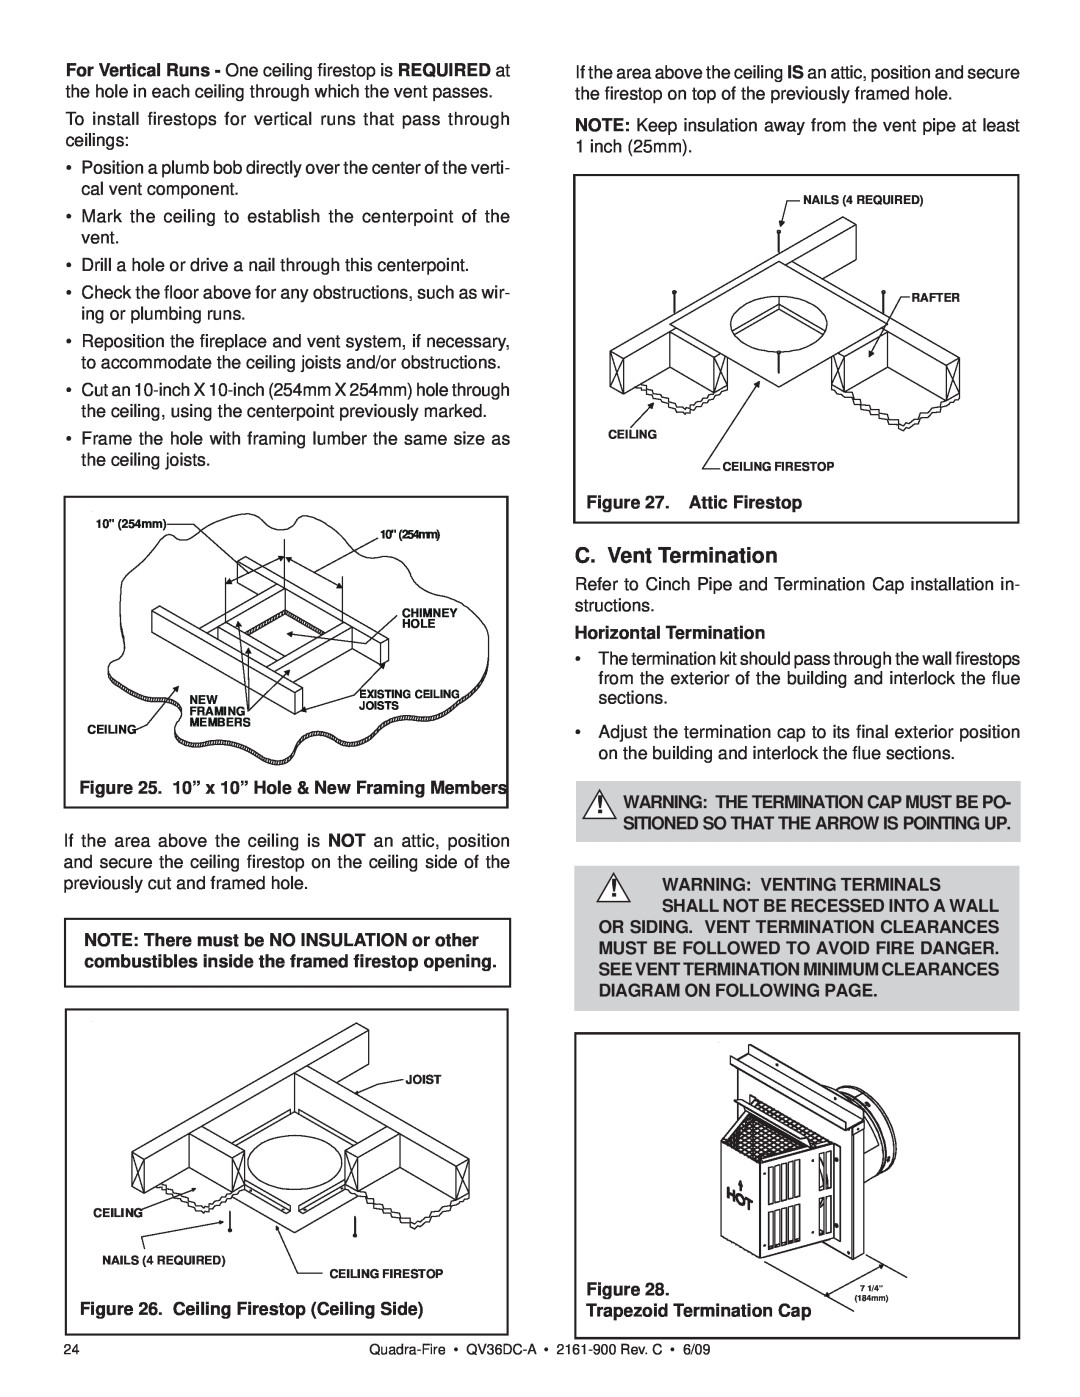 Quadra-Fire QV36DC-A owner manual C. Vent Termination, 10” x 10” Hole & New Framing Members, inch 25mm, Attic Firestop 